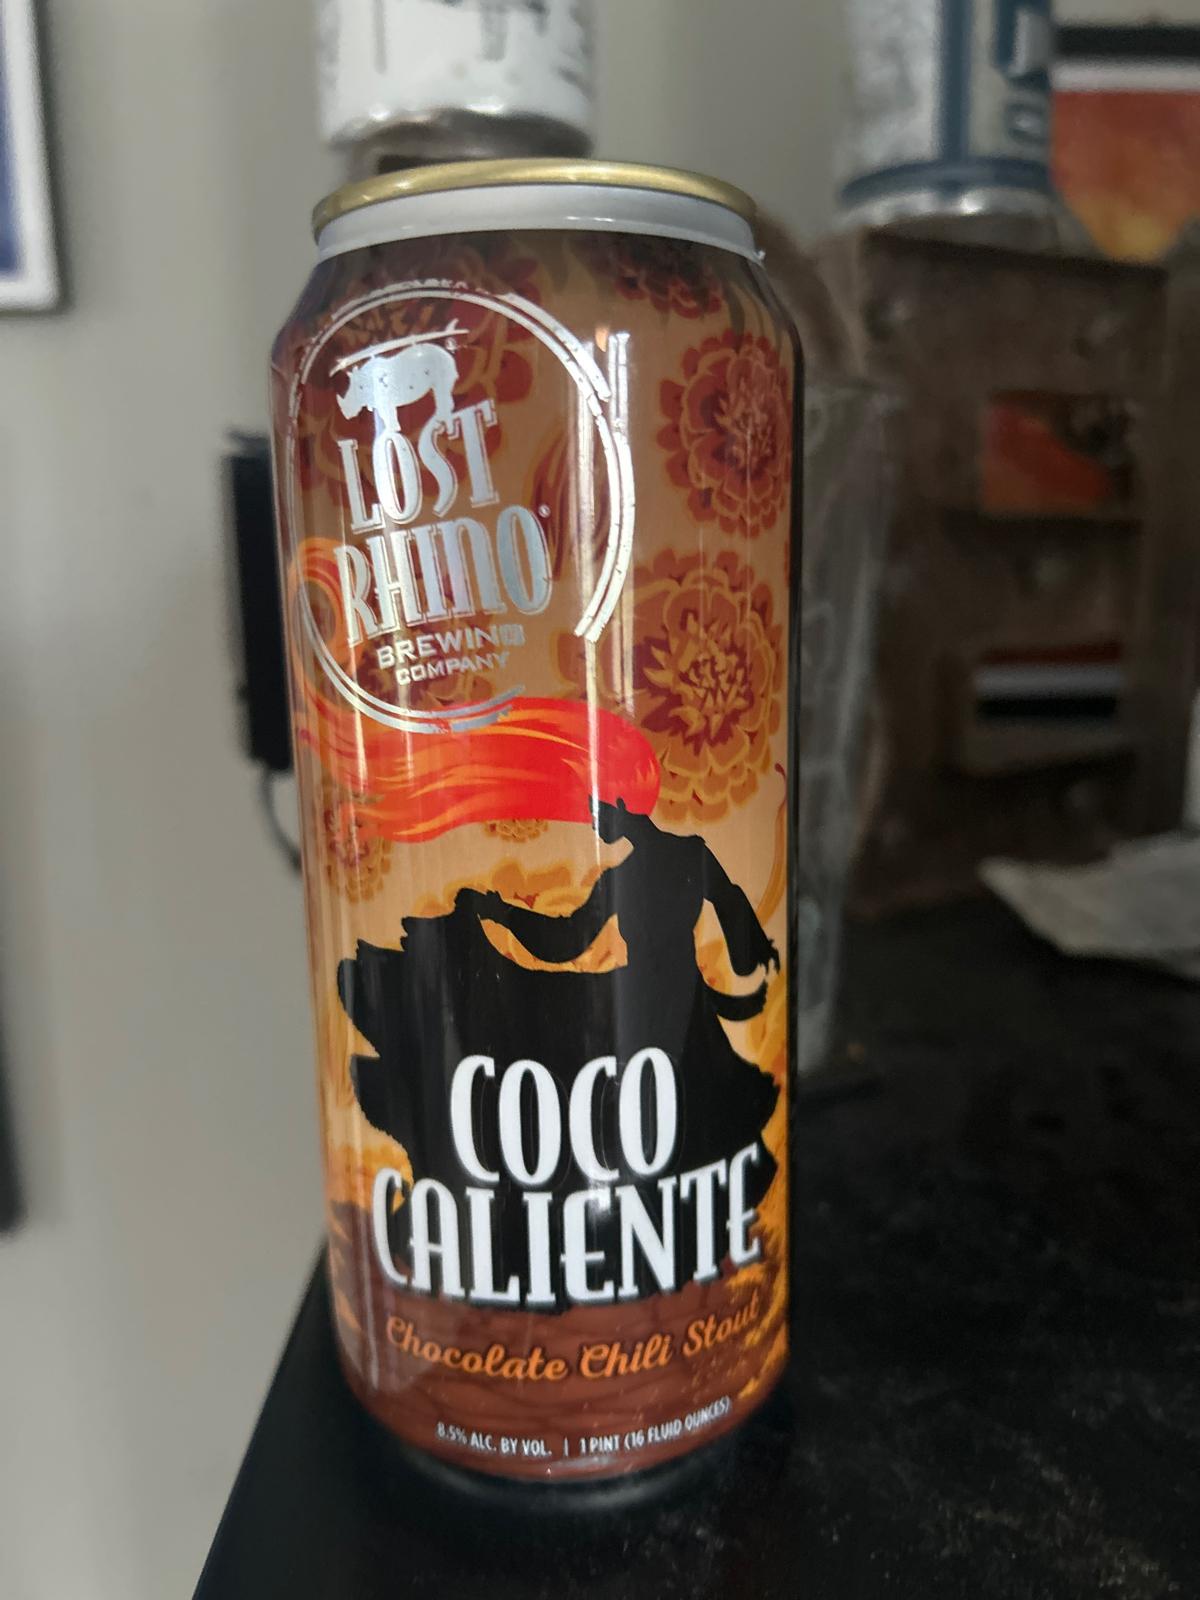 Coco Caliente